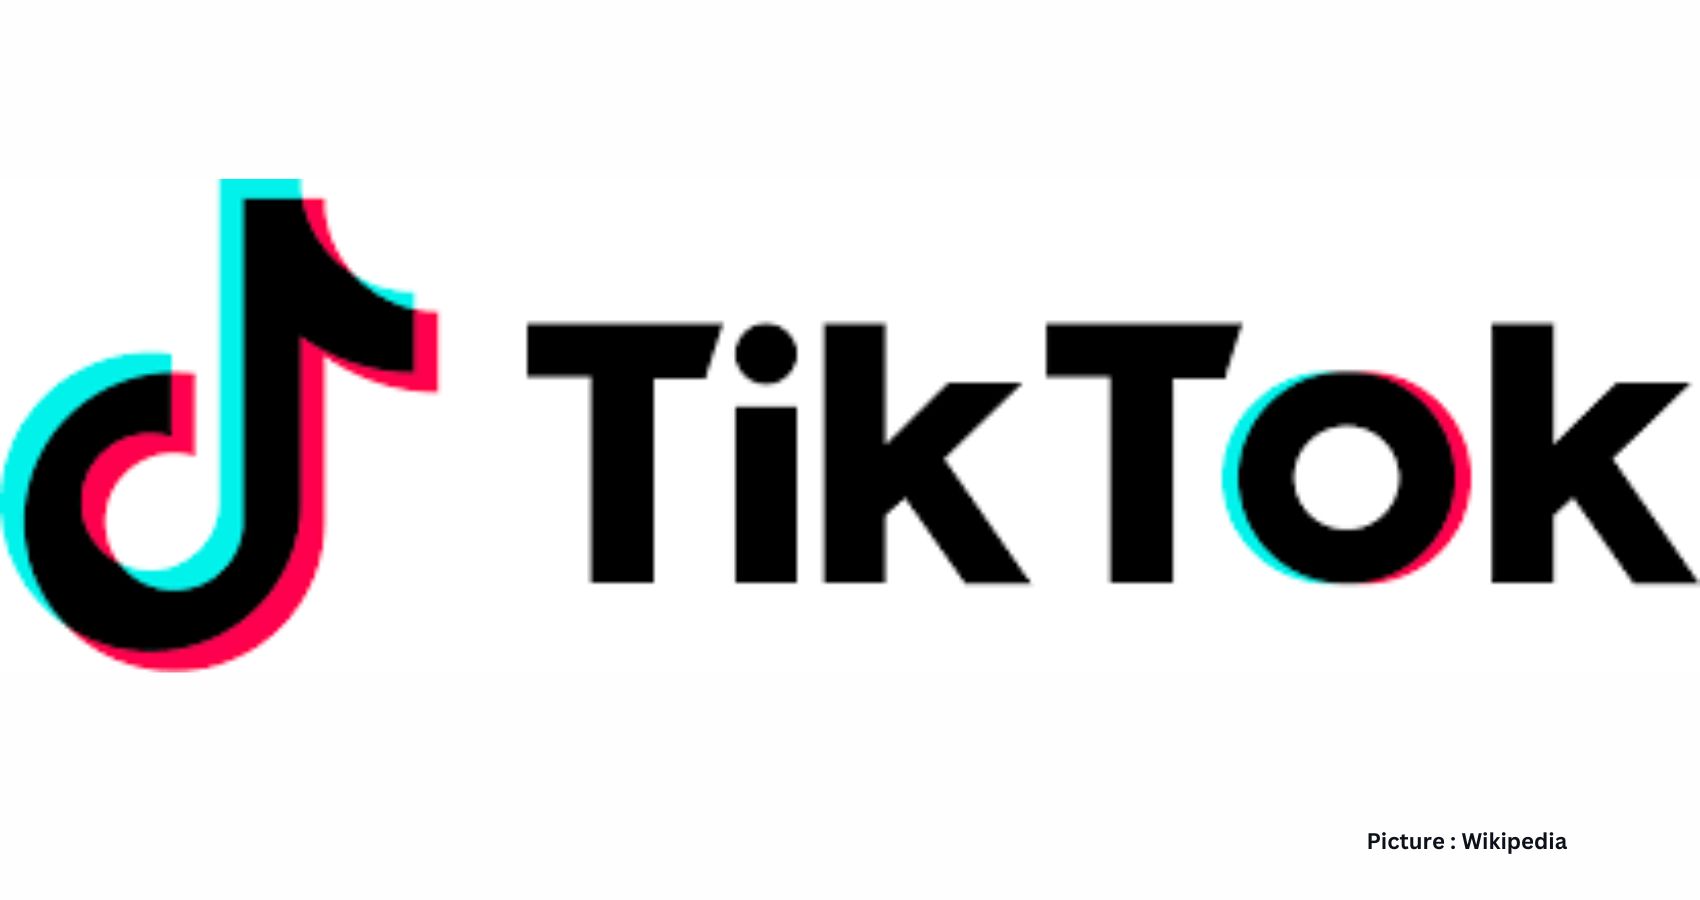 TikTok Challenges U.S. Law Targeting Its Ownership